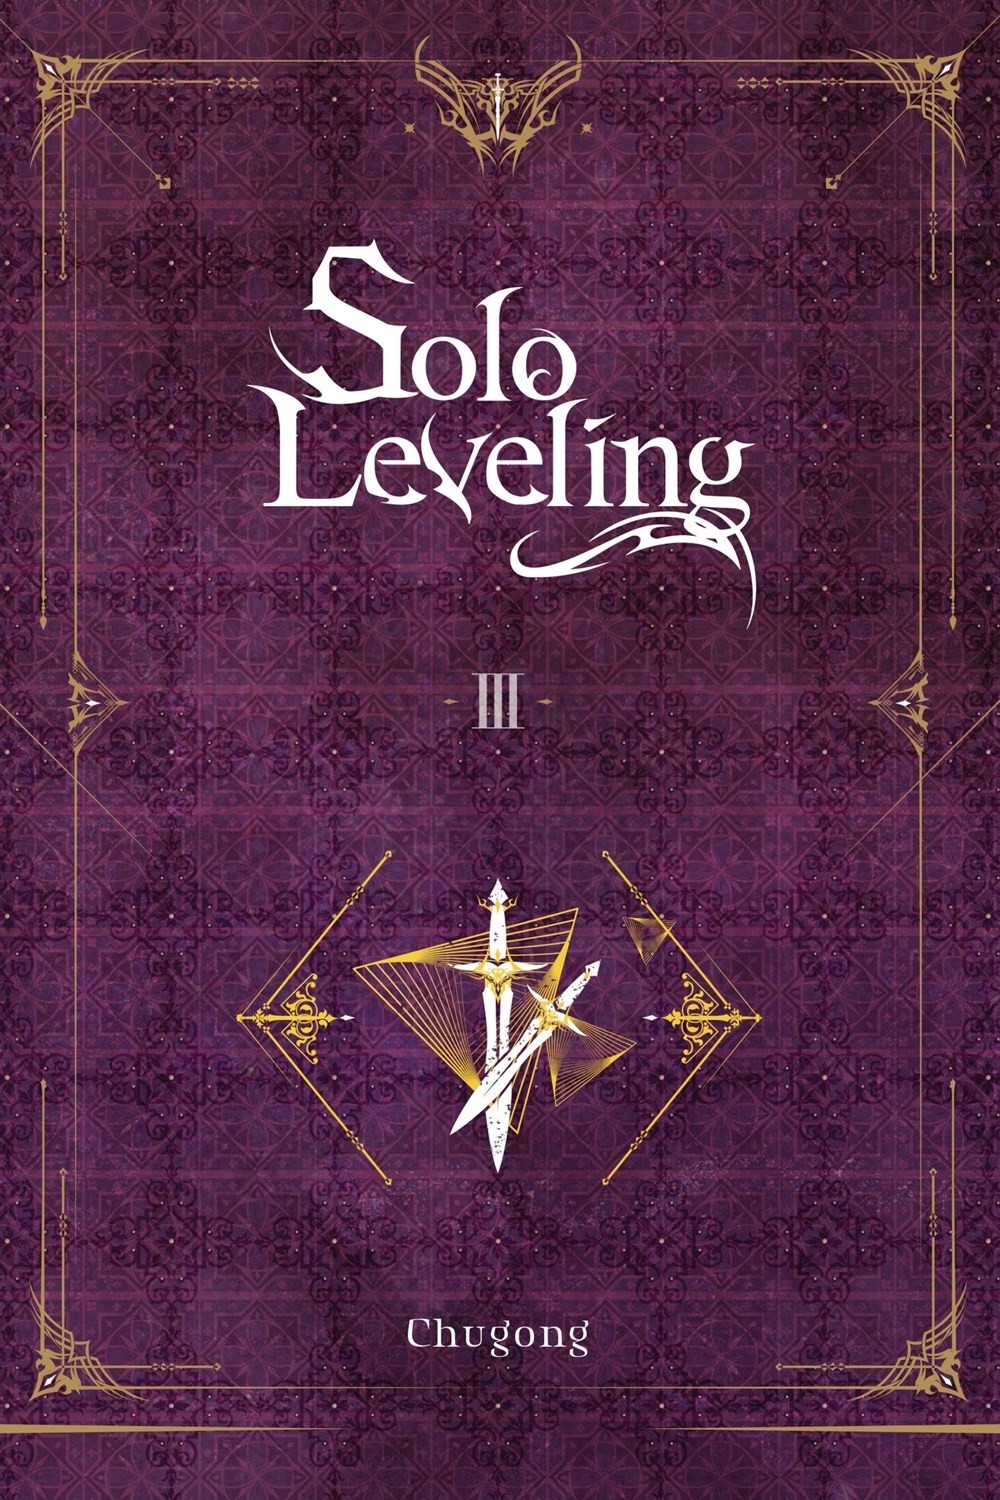 Solo Leveling, (Light Novel) Vol. 03